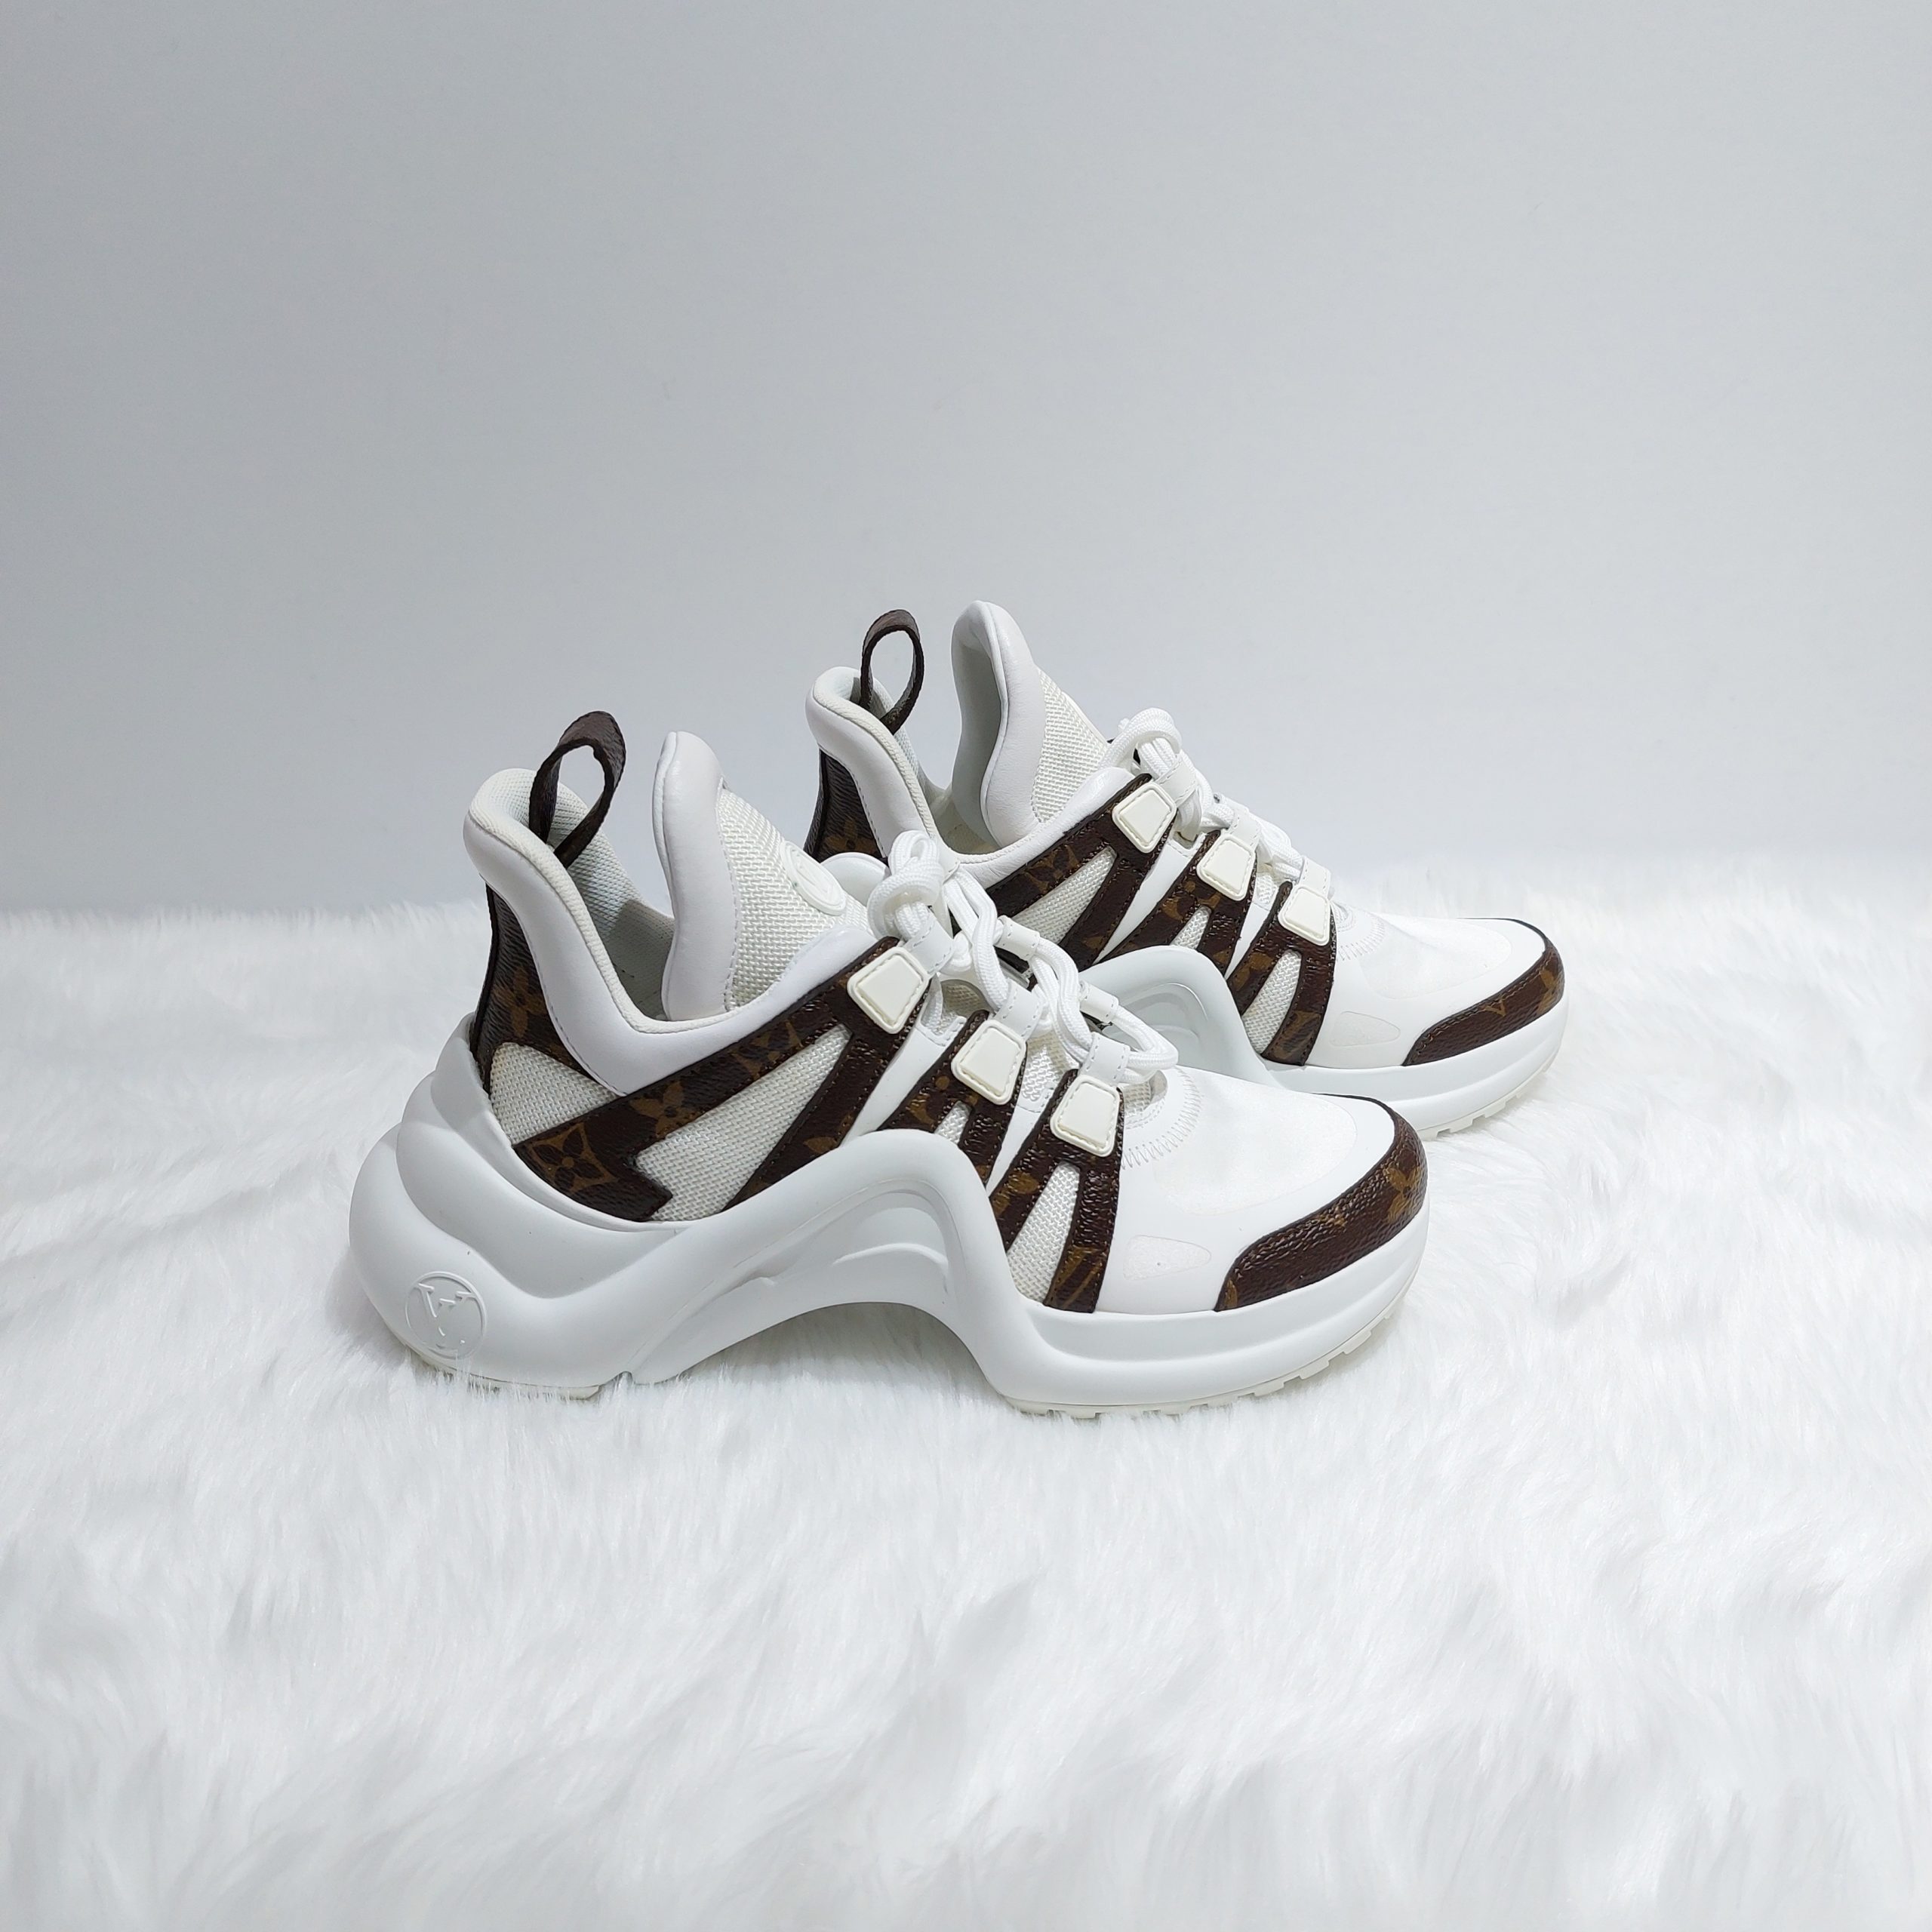 Louis Vuitton Archlight Sneaker Shoes In Box EU 36.5 #61486 - Monty's